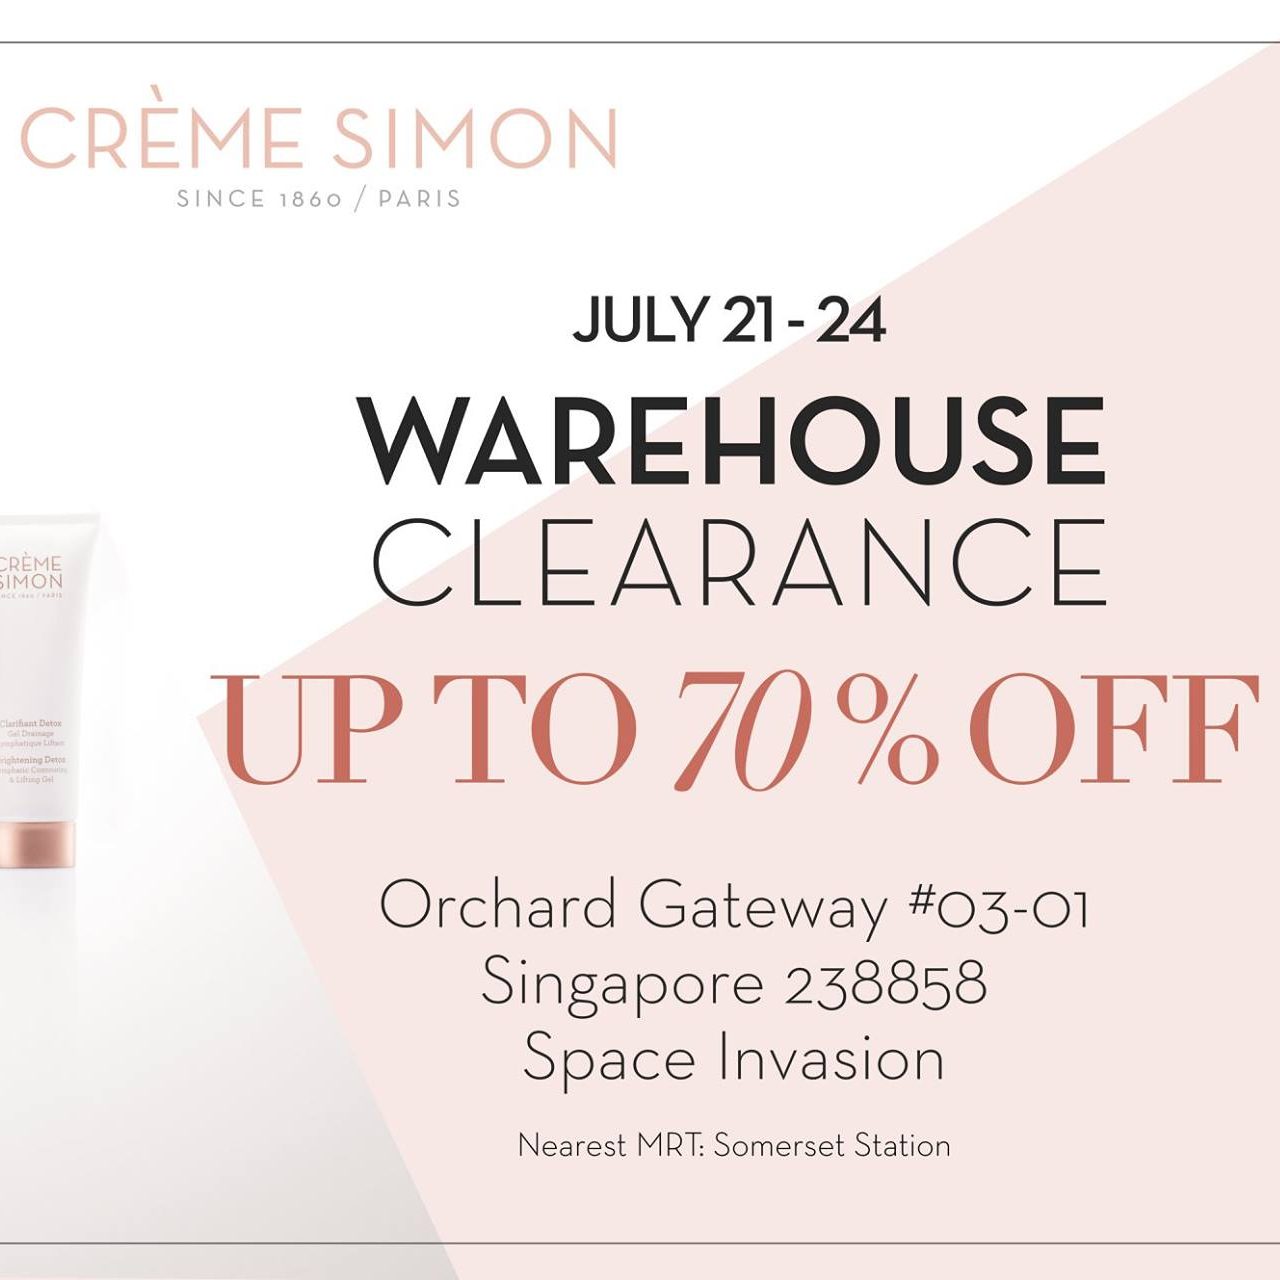 CRÈME SIMON Warehouse Clearance Singapore Promotion 21 to 24 Jul 2016